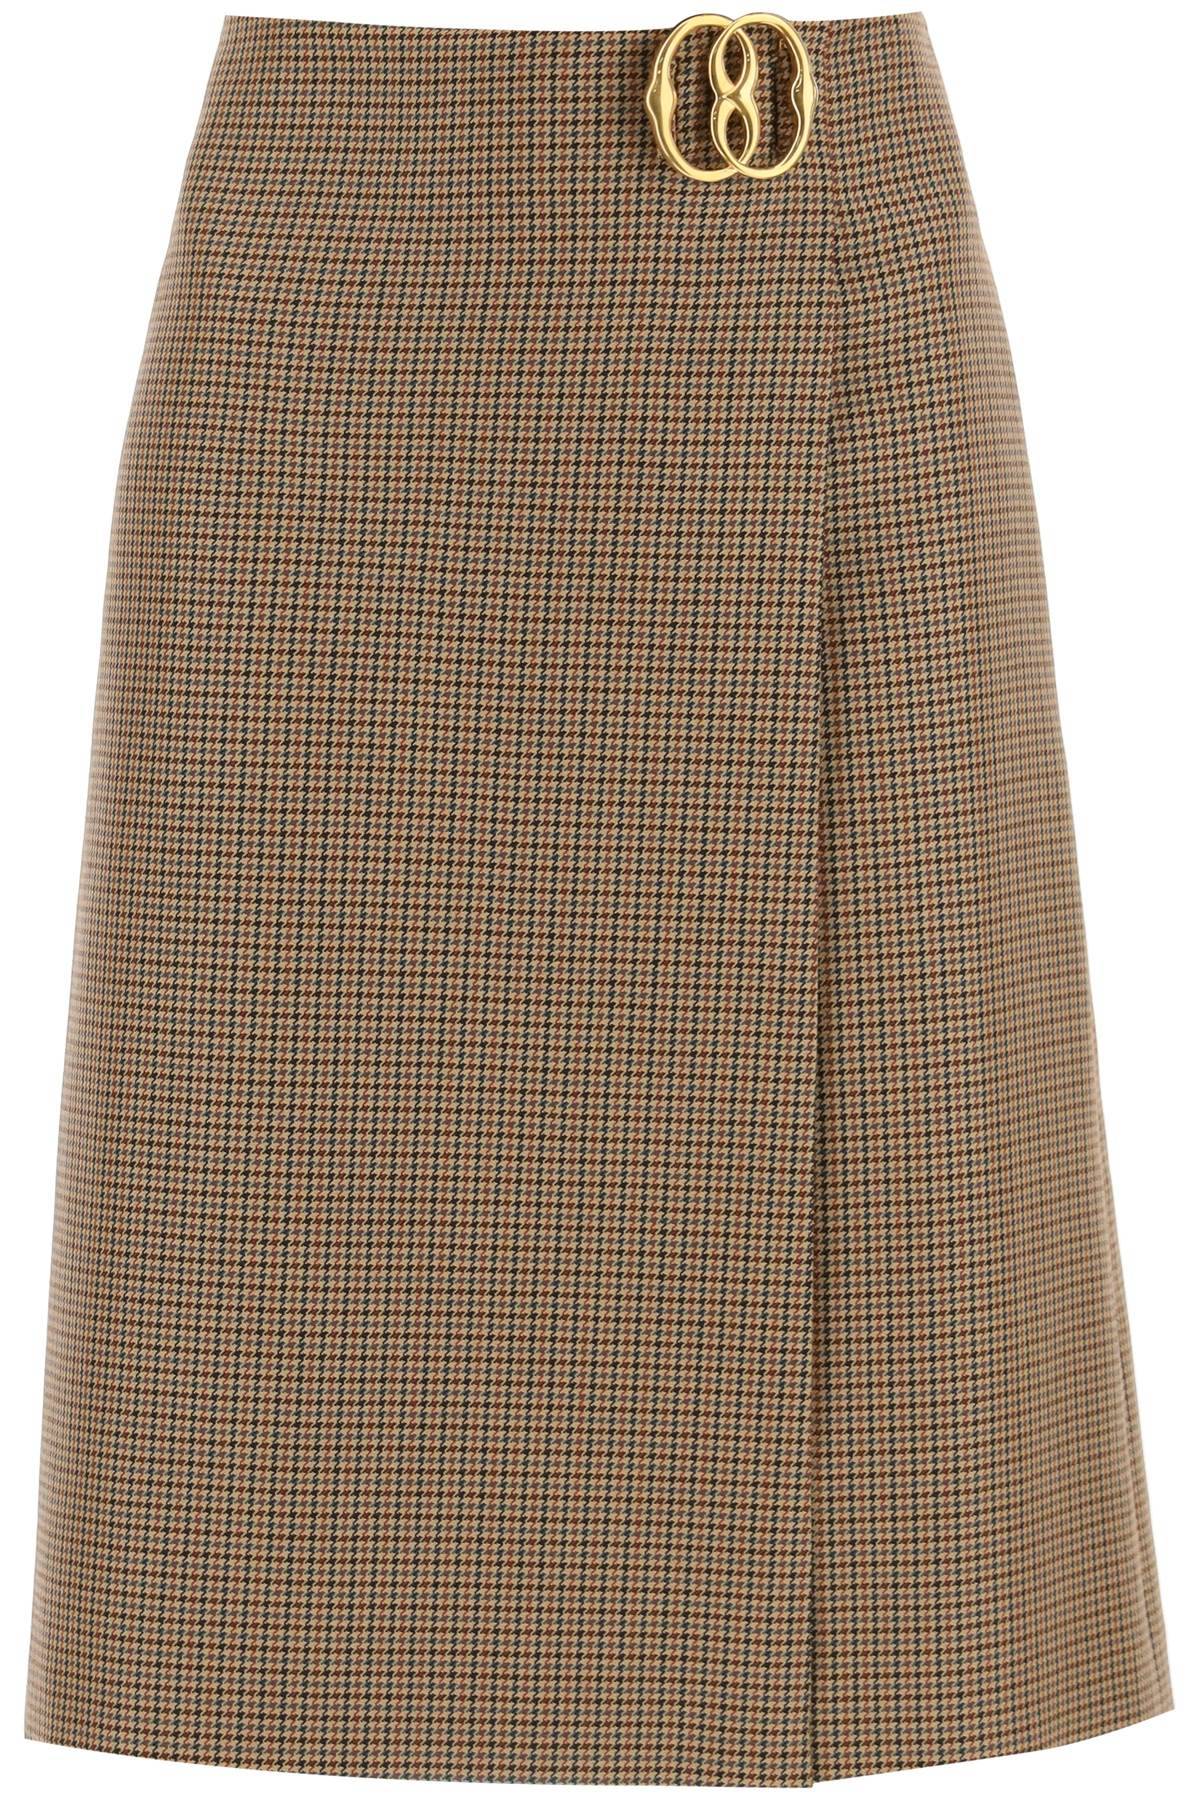 BALLY BALLY houndstooth a-line skirt with emblem buckle